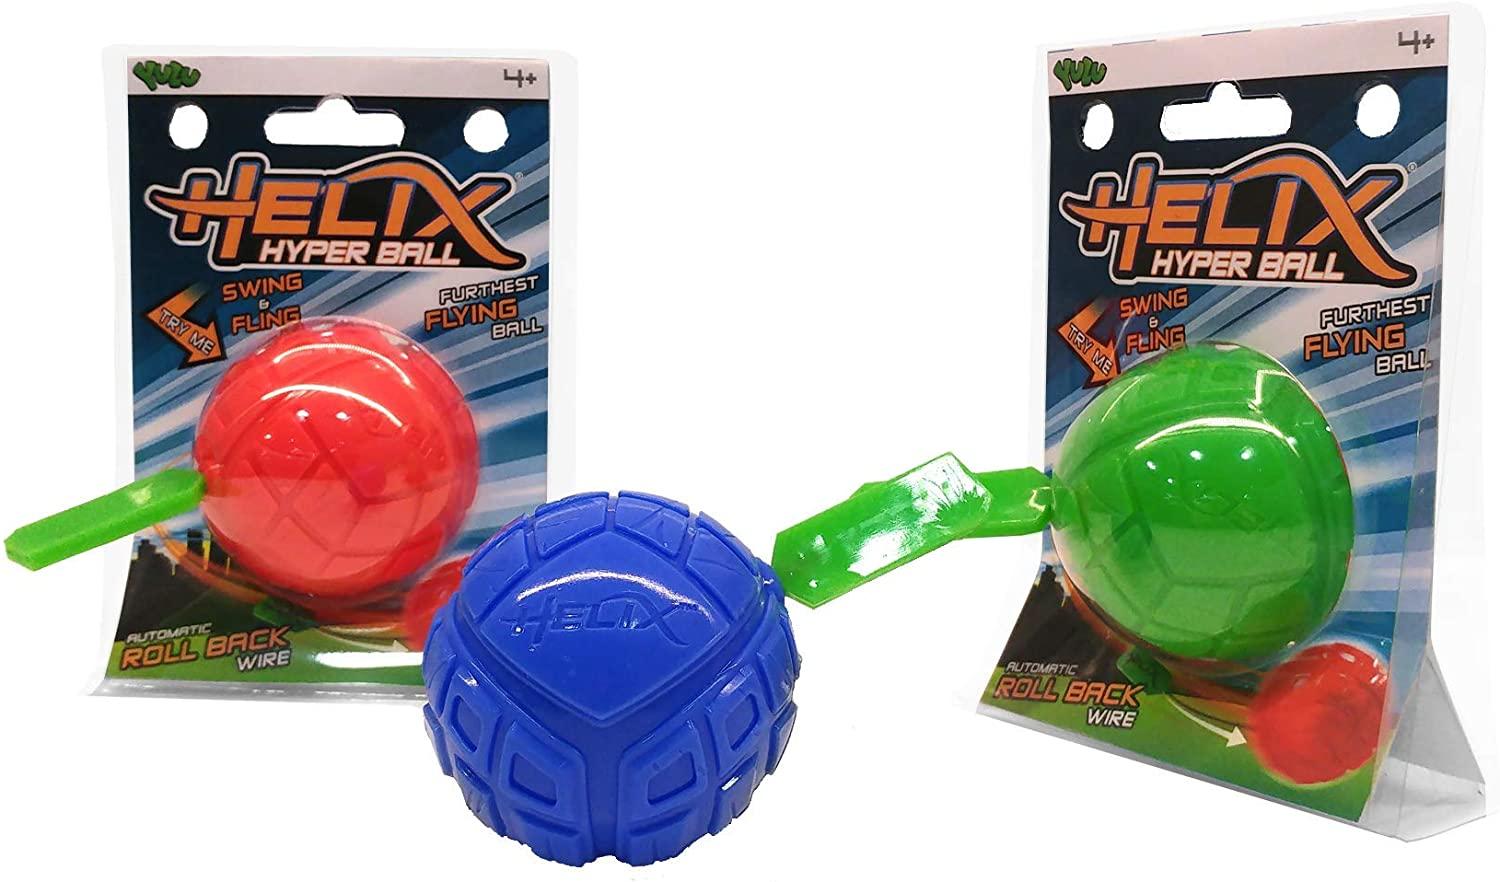 Yulu Helix Hyper Ball Toymaster Ballina